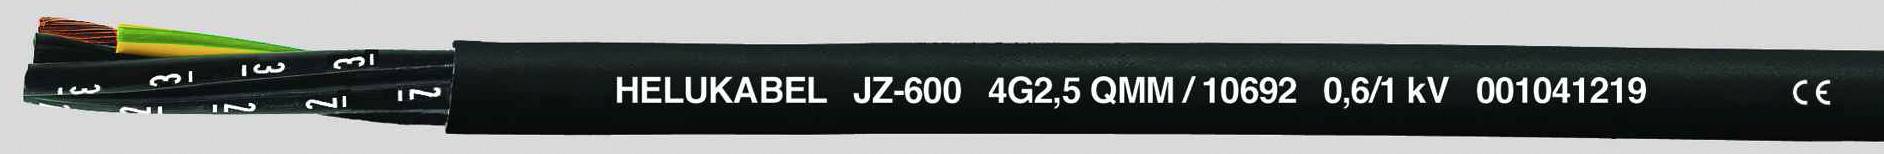 HELUKABEL JZ-600 Steuerleitung 5 G 1 mm² Schwarz 10621-500 500 m